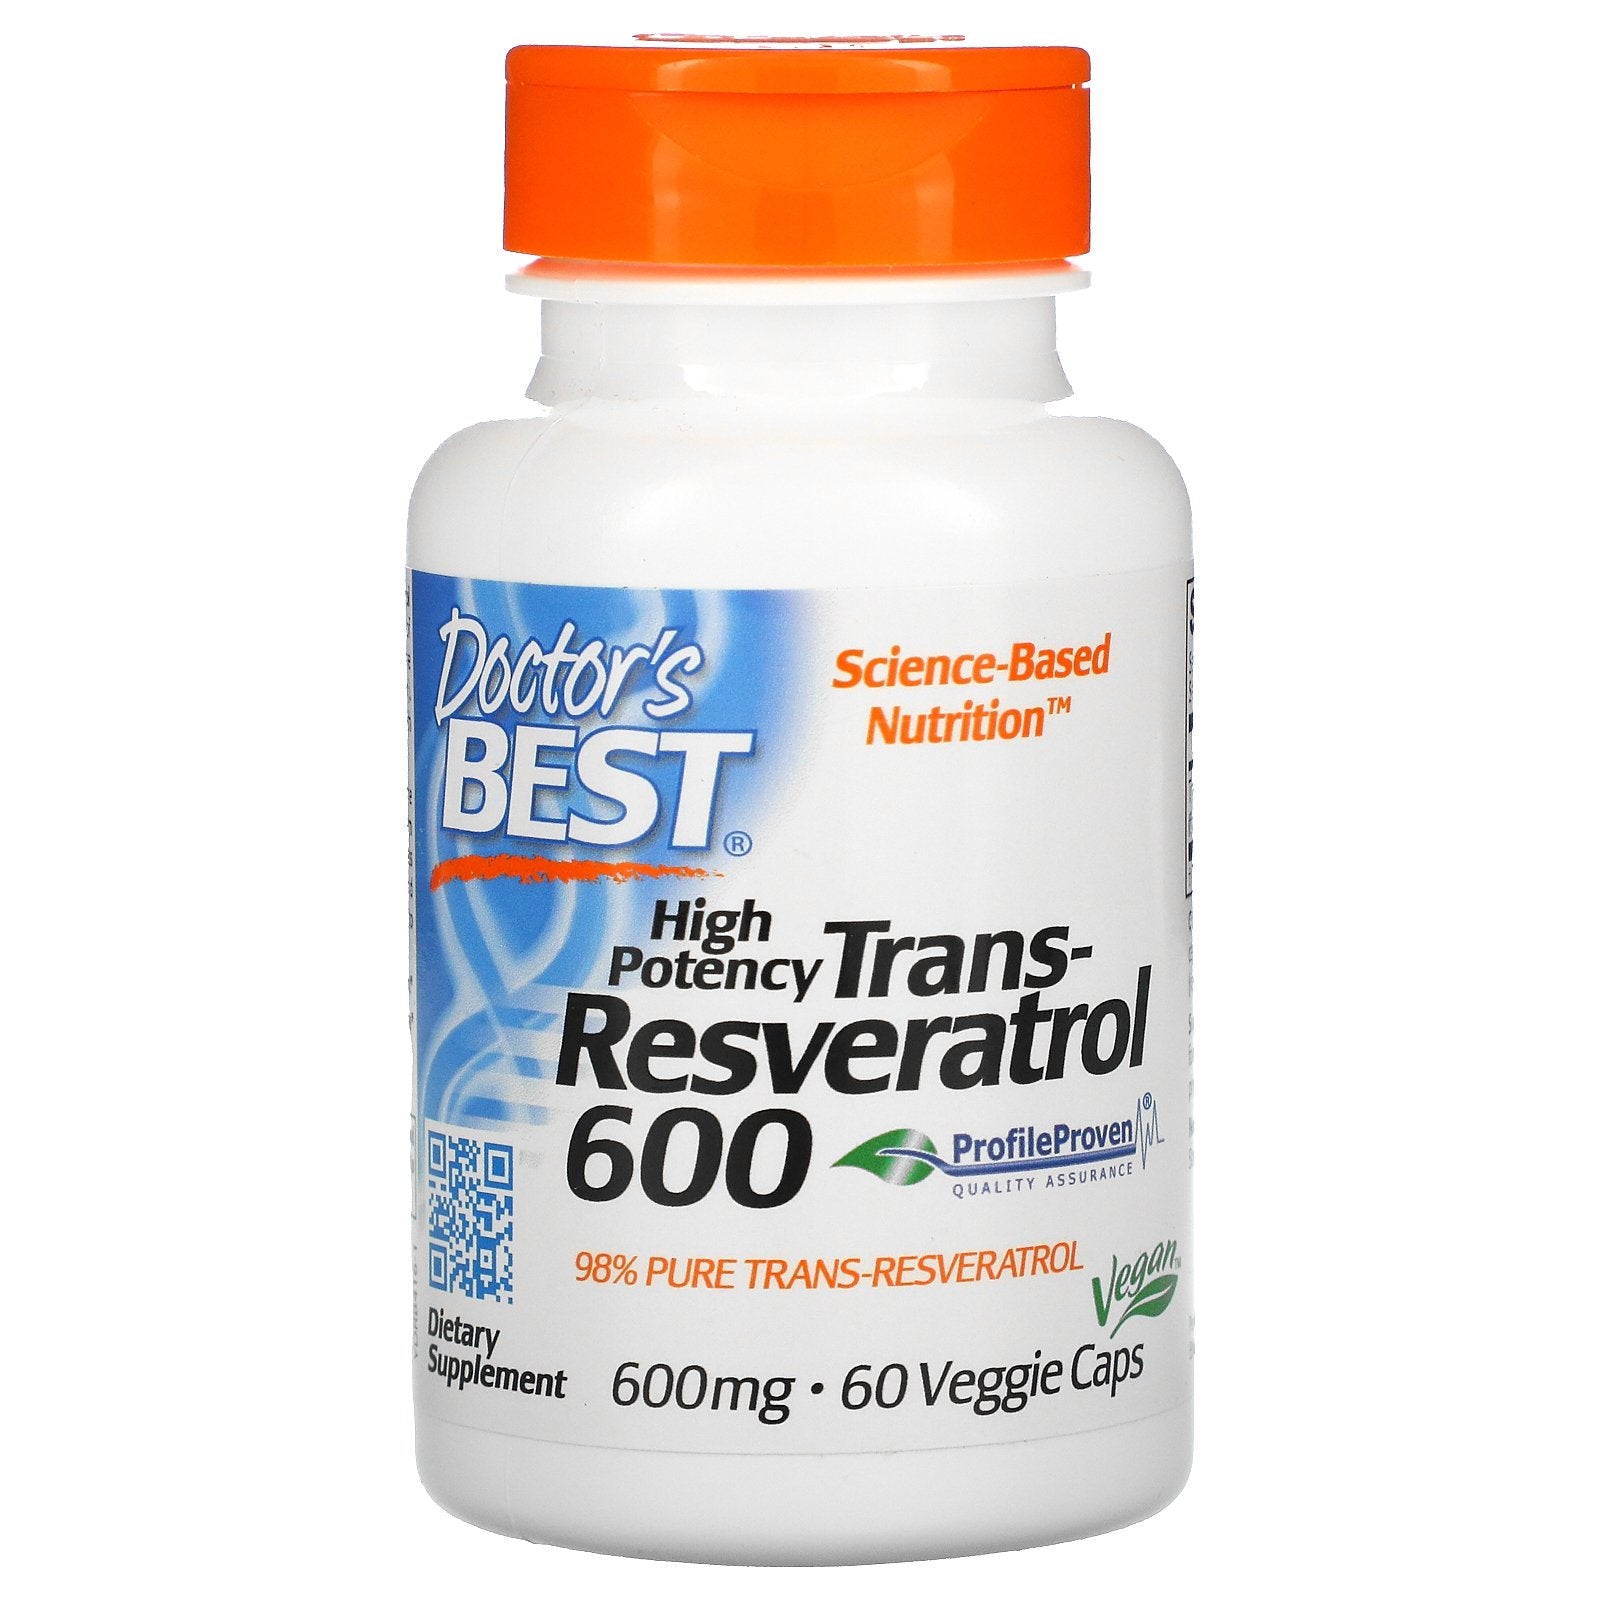 Doctor's Best, High Potency Trans-Resveratrol 600, 600 mg, 60 Veggie Caps